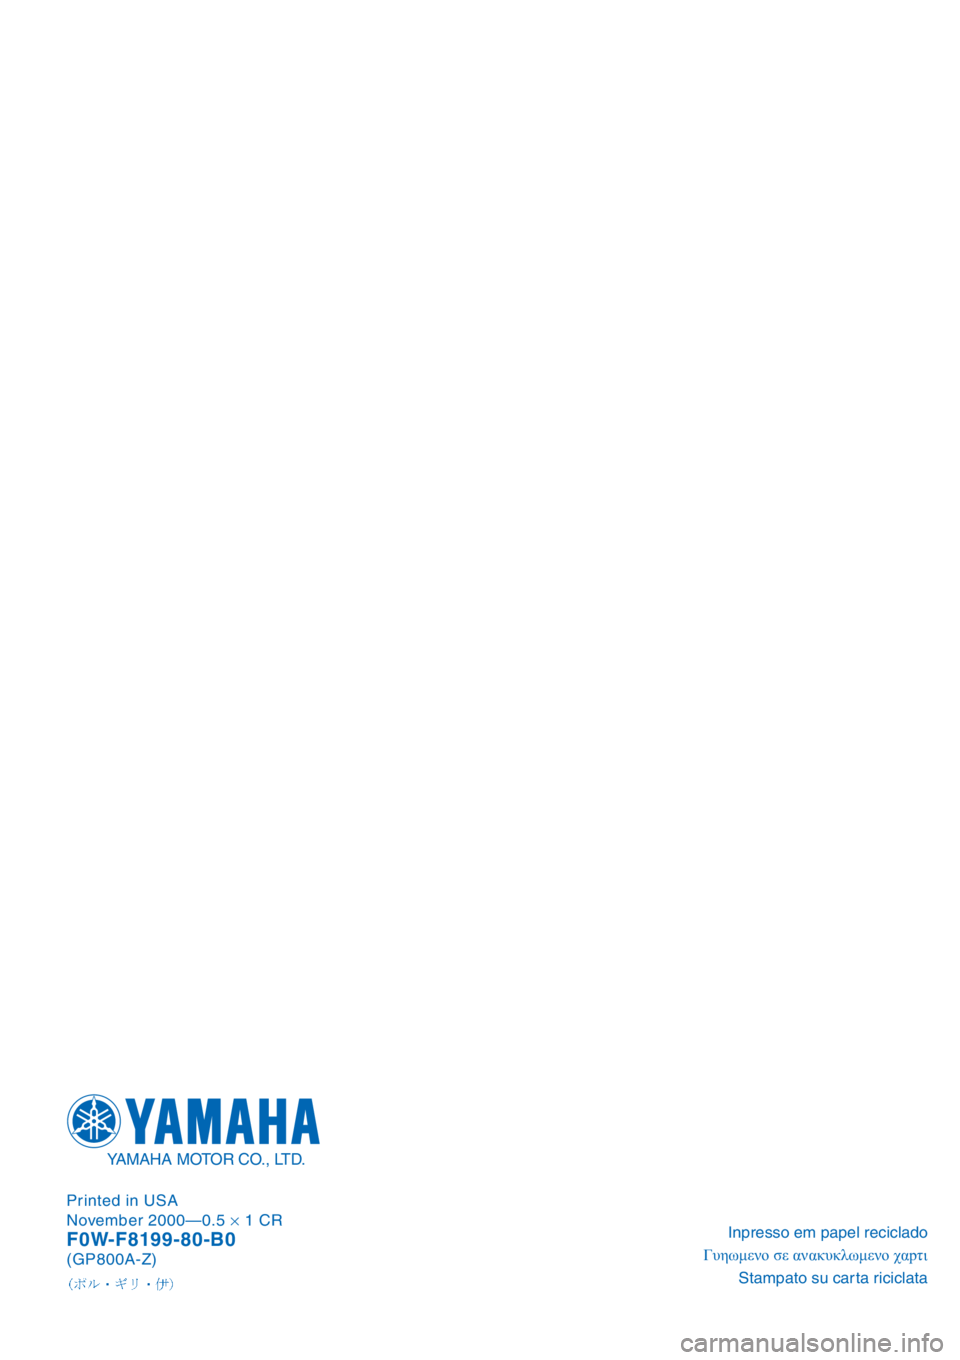 YAMAHA GP800R 2021  ΟΔΗΓΌΣ ΧΡΉΣΗΣ (in Greek) Inpresso em papel reciclado
+#&0 �10�..#&0 �$.�S2
Stampato su car ta riciclata Printed in USA
November 2000—0.5 × 1 CRF0W-F8199-80-B0(GP800A-Z)
YAMAHA MOTOR C